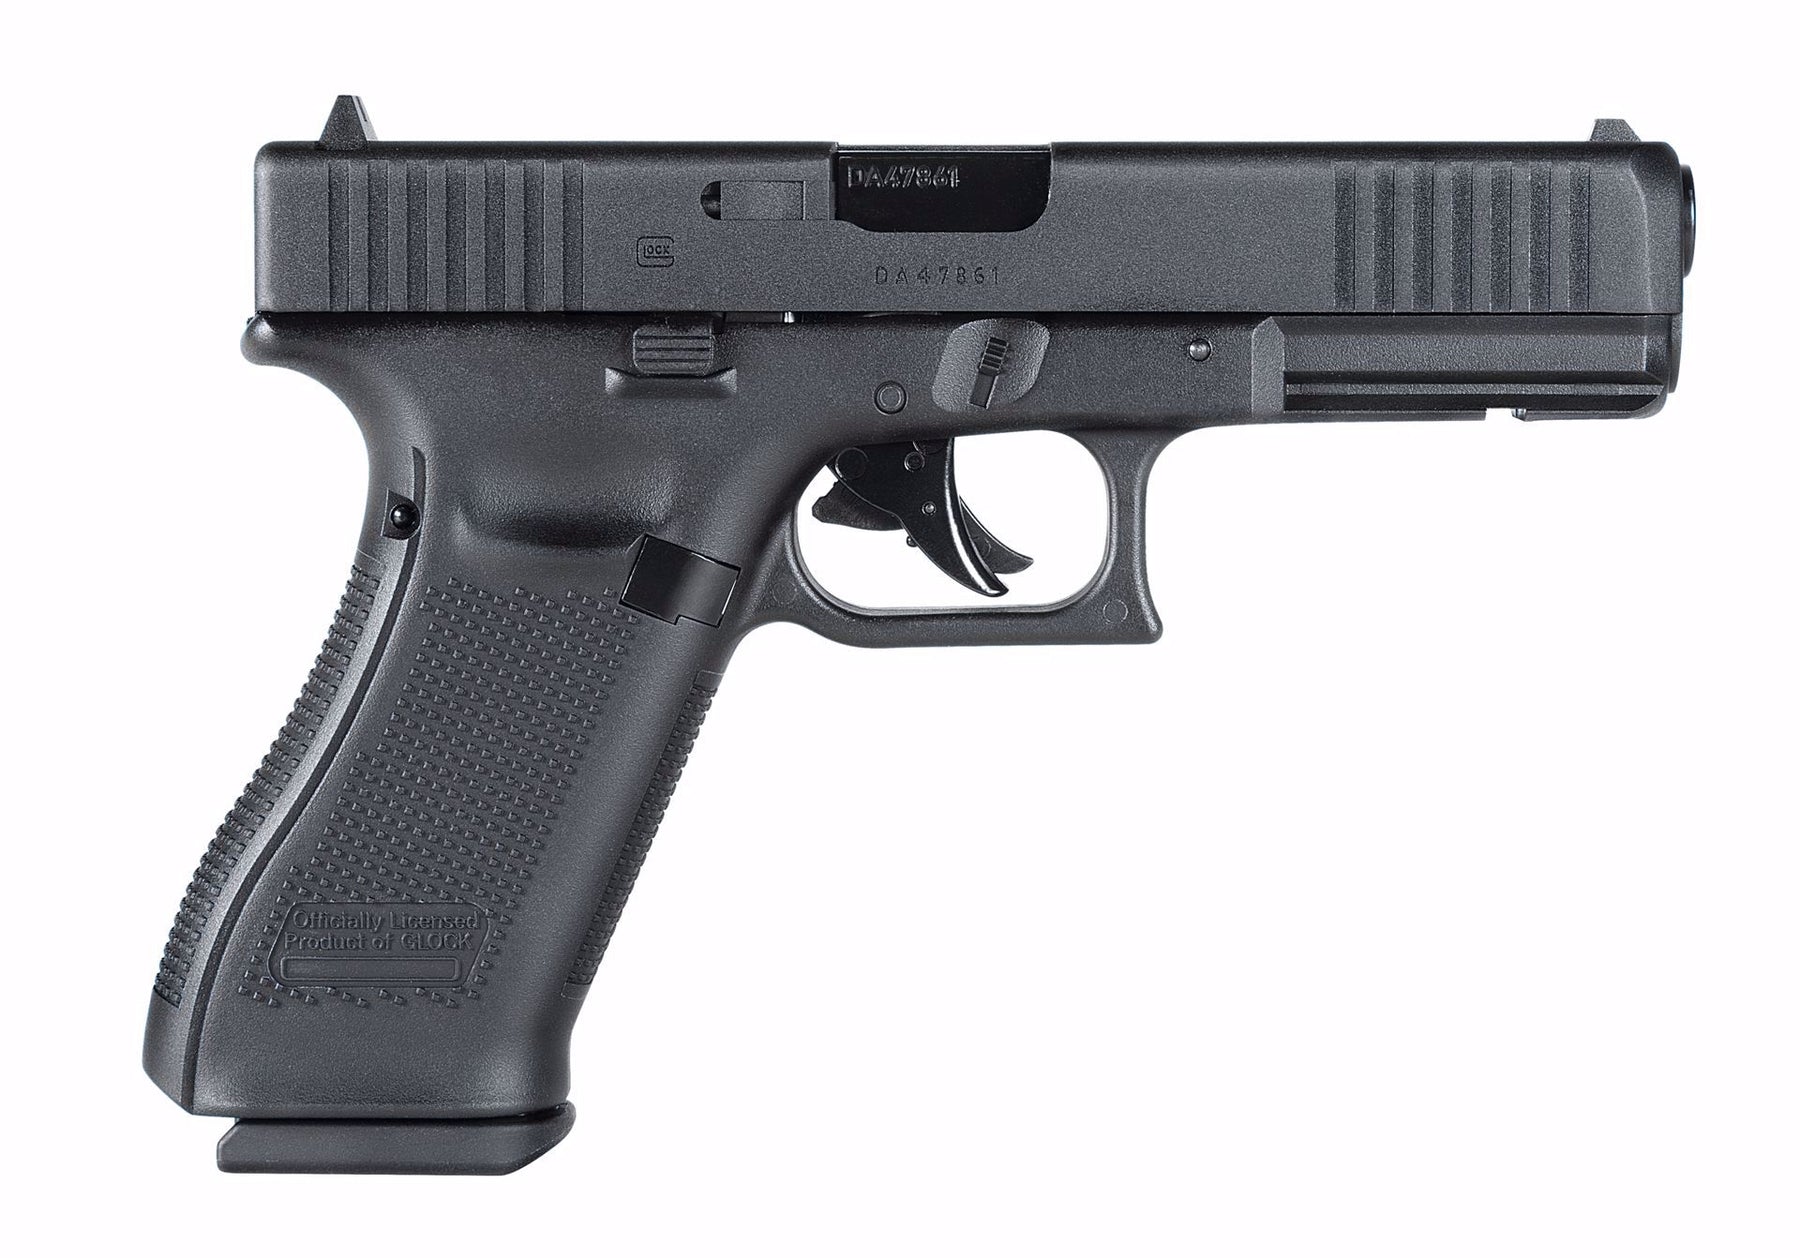 G17 Gen 5 .177 Pellet - Black | Buy Airgun Pellet Pistol